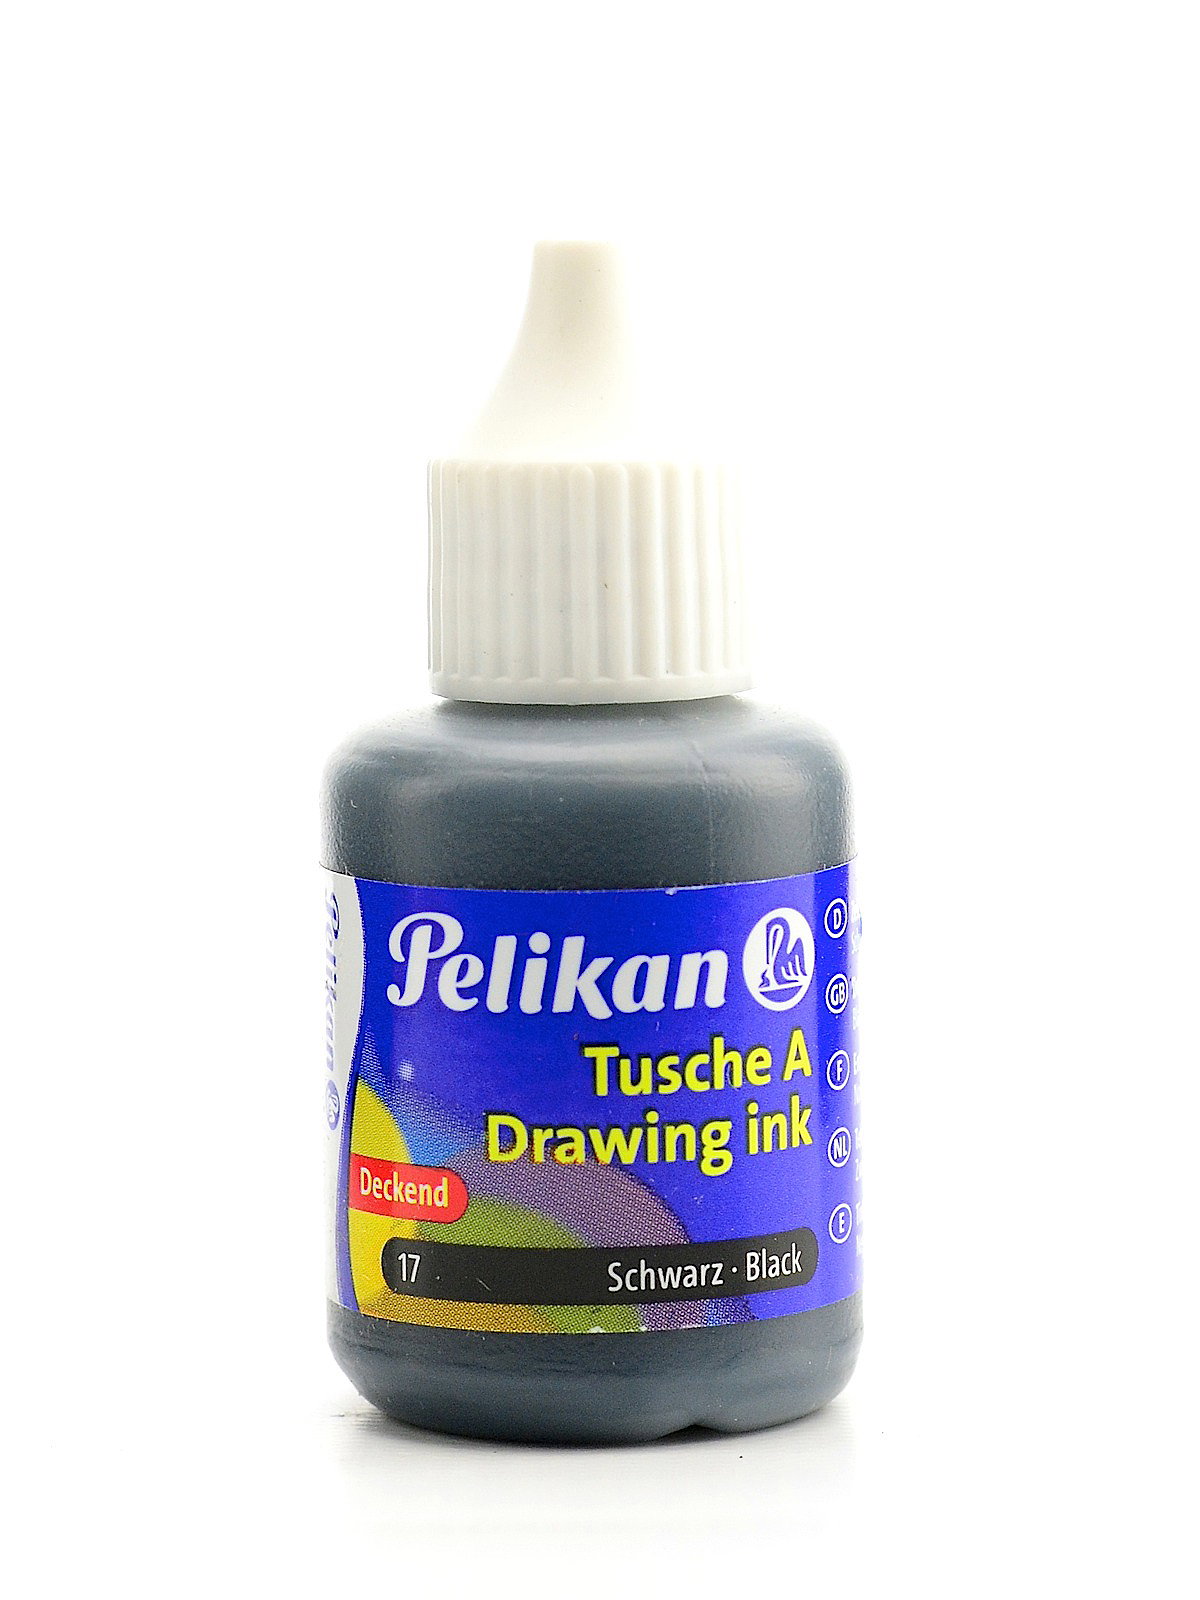 Vechter Wasserette Bounty Pelikan Drawing Ink | MisterArt.com